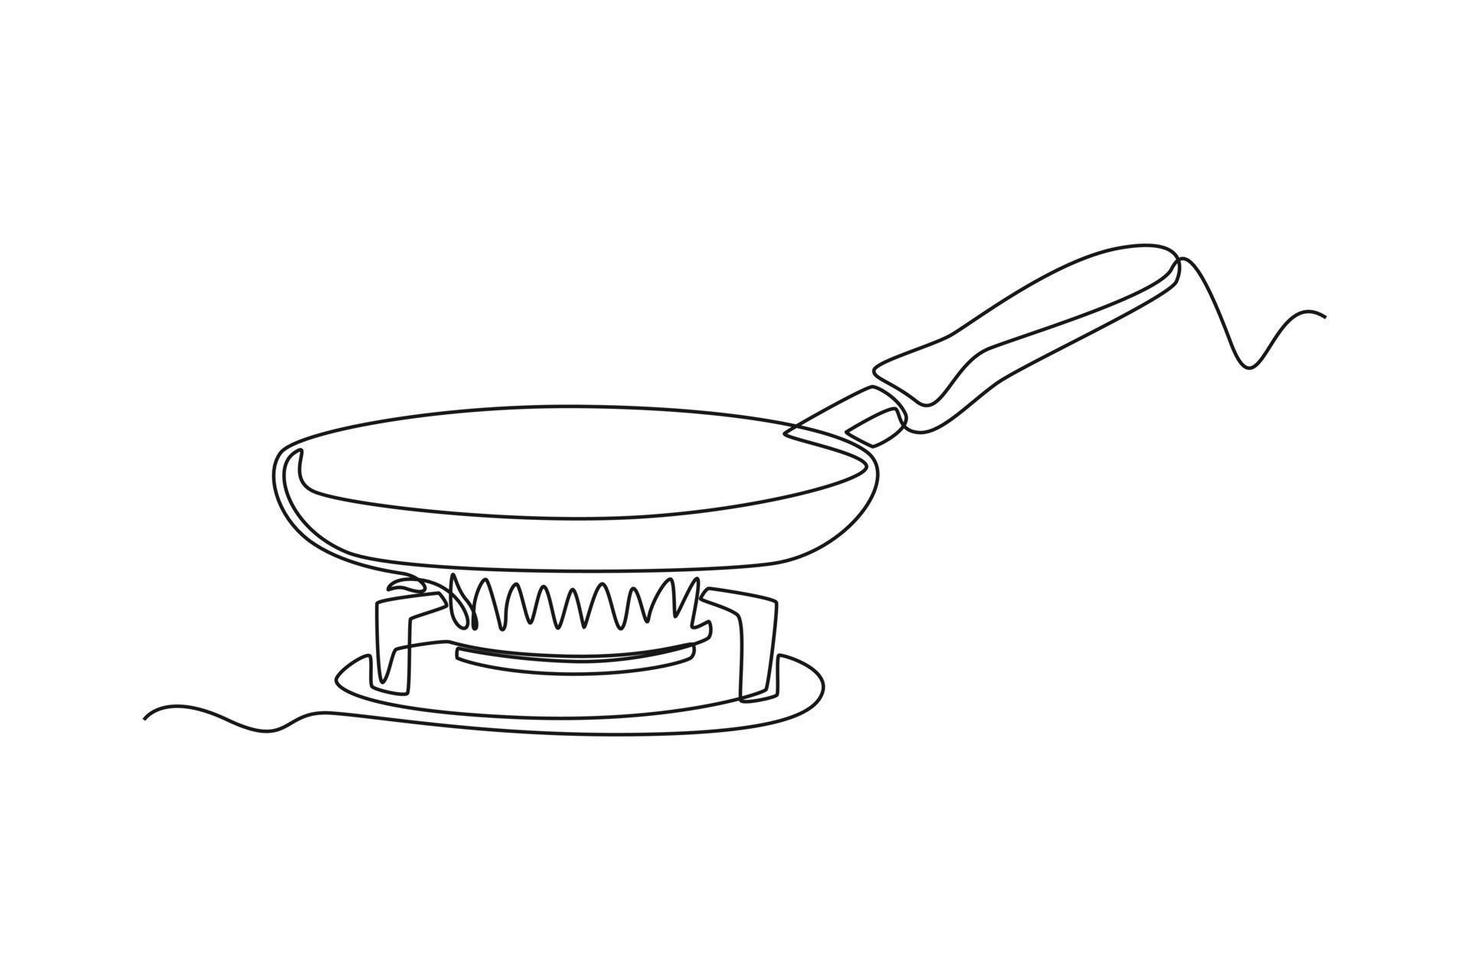 enda en linje teckning panorera på de brinnande spis. kök rum begrepp kontinuerlig linje dra design grafisk vektor illustration